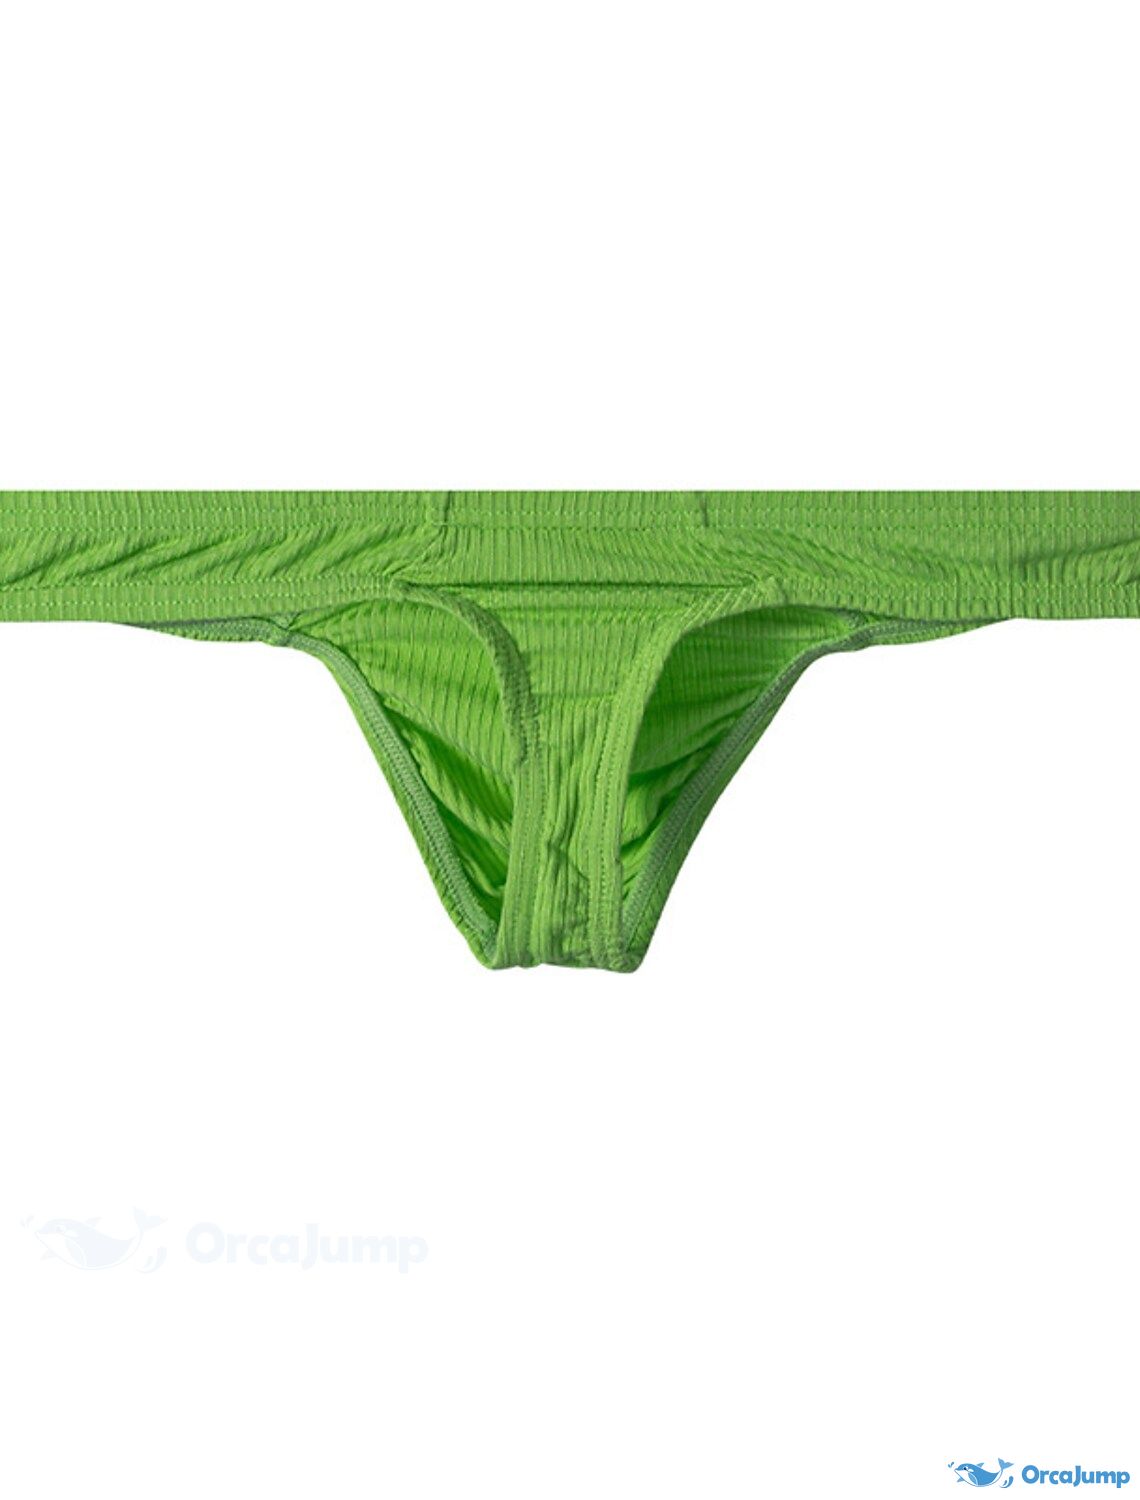 OrcaJump - Mens Basic G-String Underwear 1PC - Simple Fashion, Sexy, C